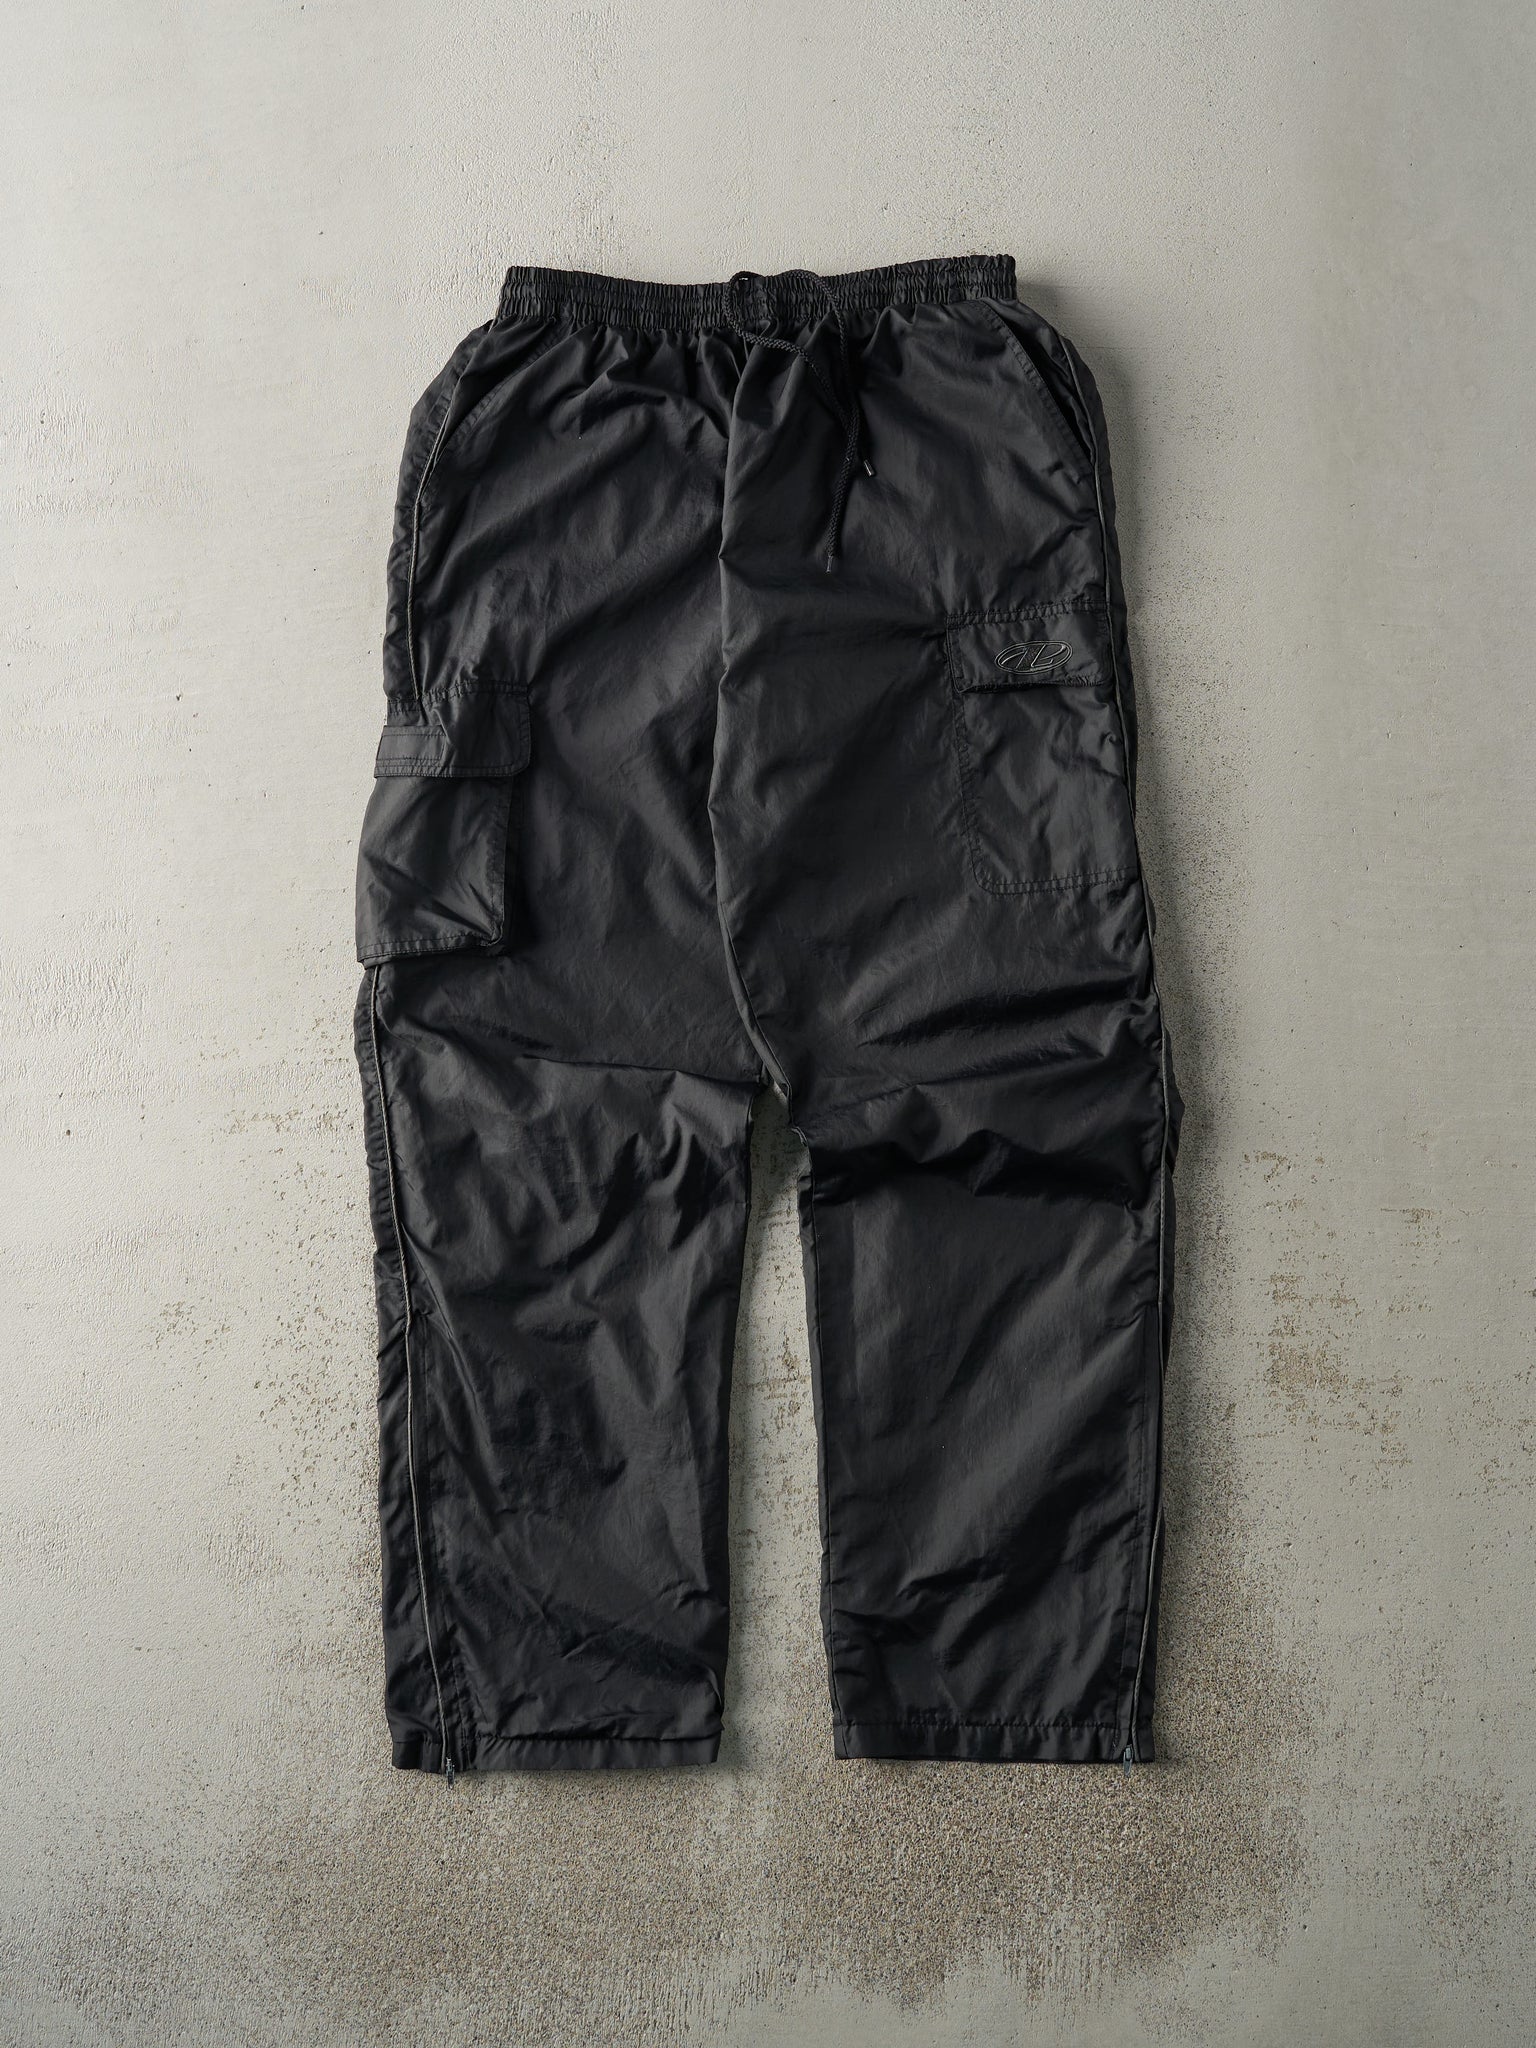 Vintage 90s Black Cargo Windbreaker Pants (30x30.5)